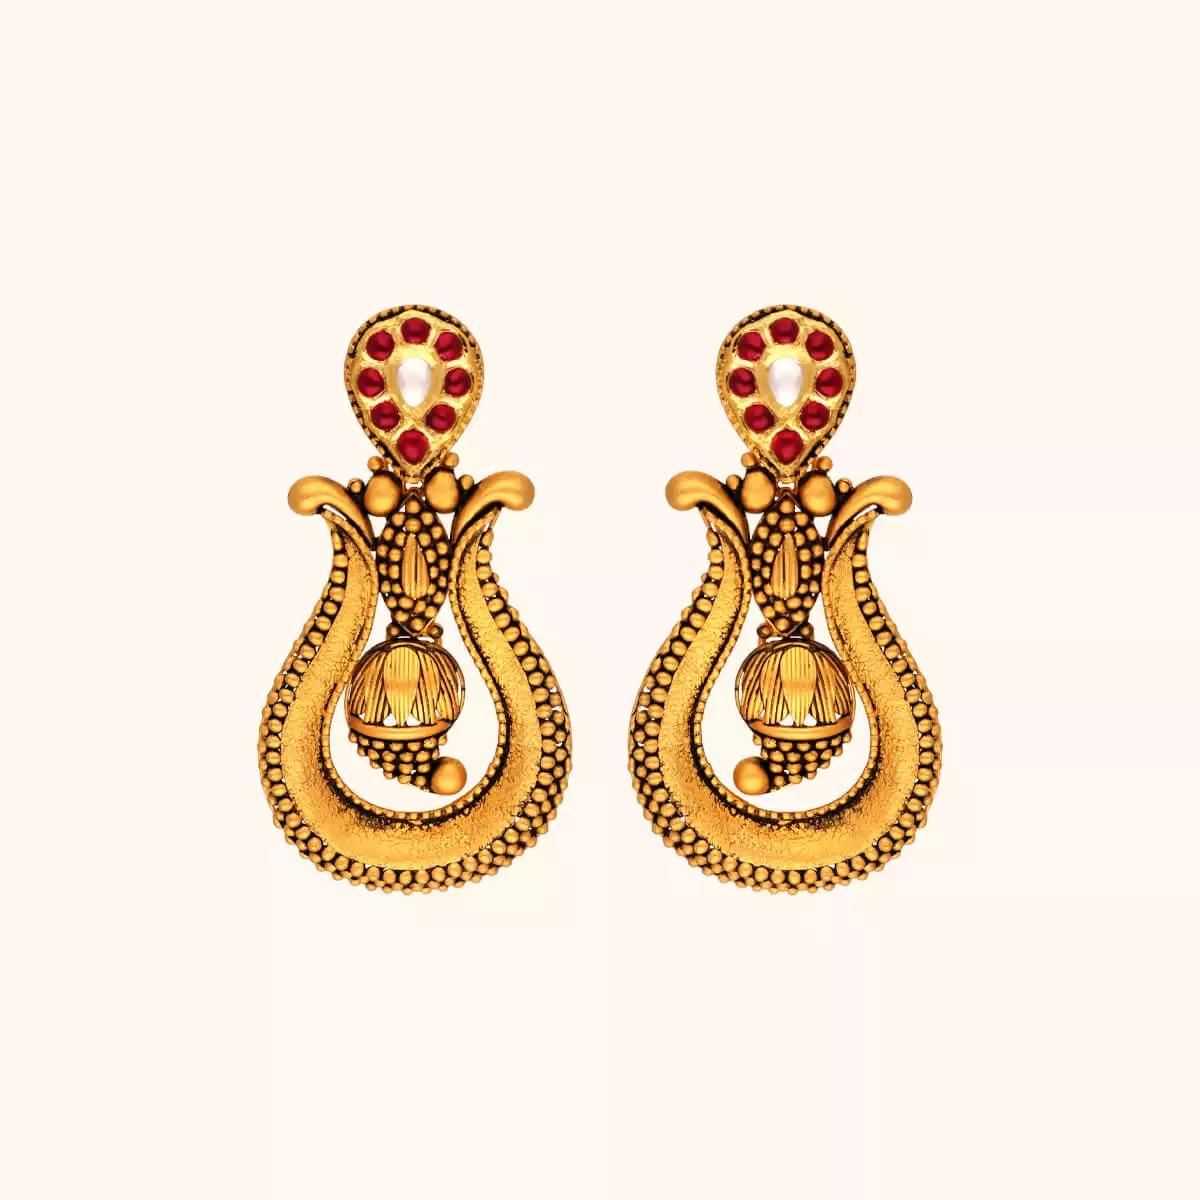 22 KT Antique Gold Earring